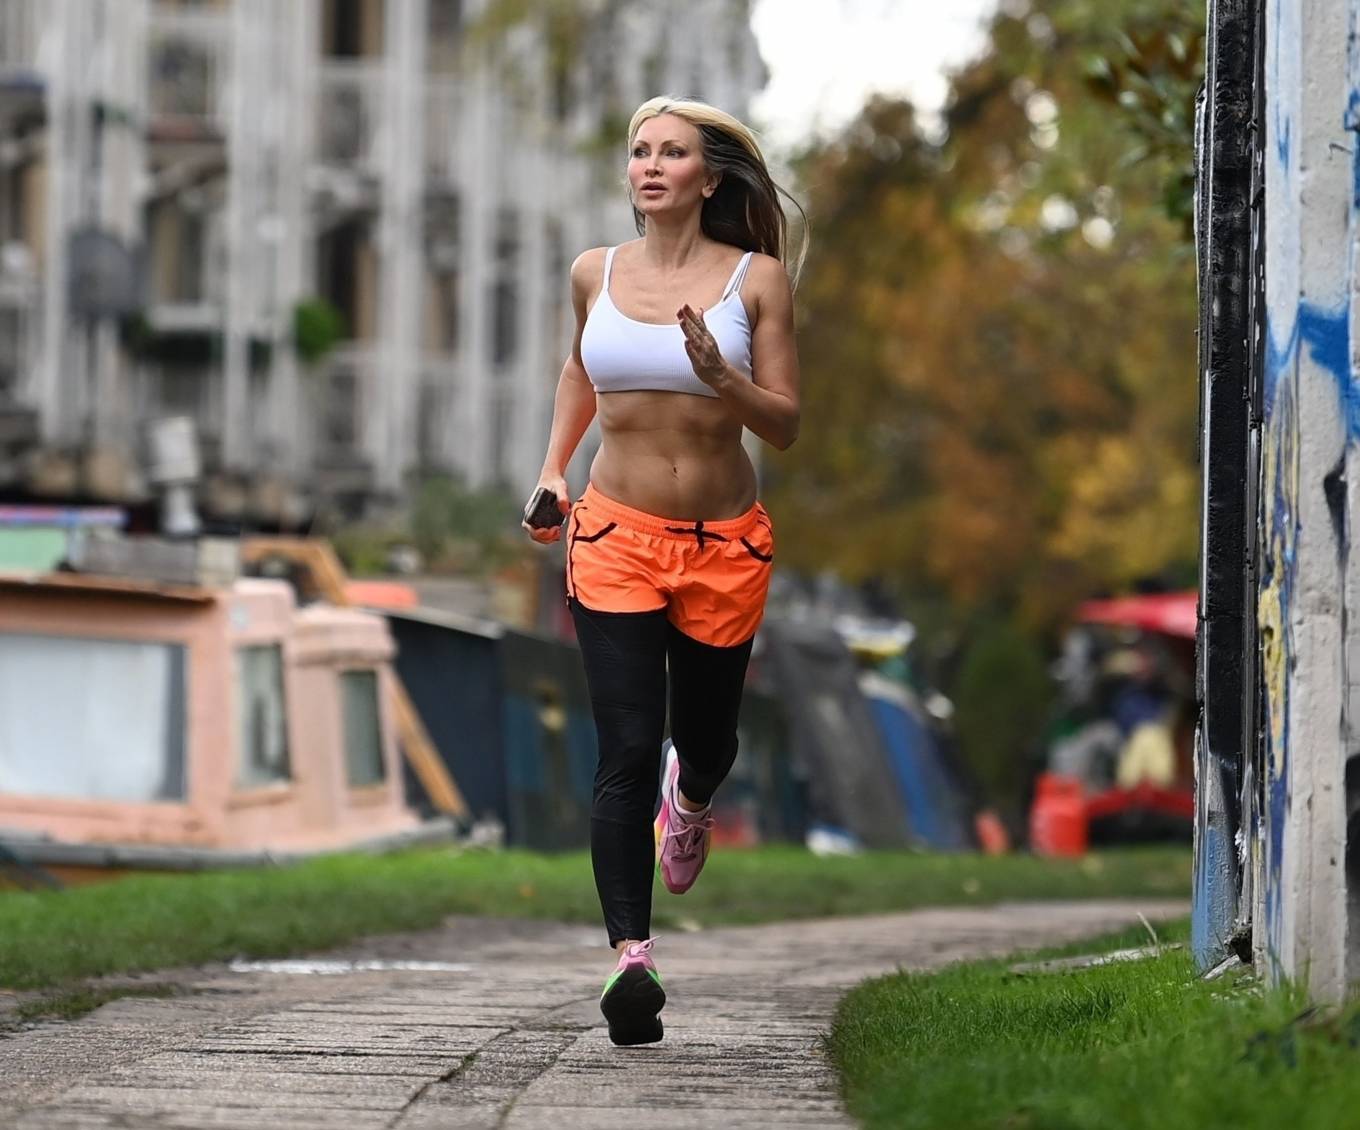 Caprice Bourret 2020 : Caprice Bourret – Seen jogging in London-01